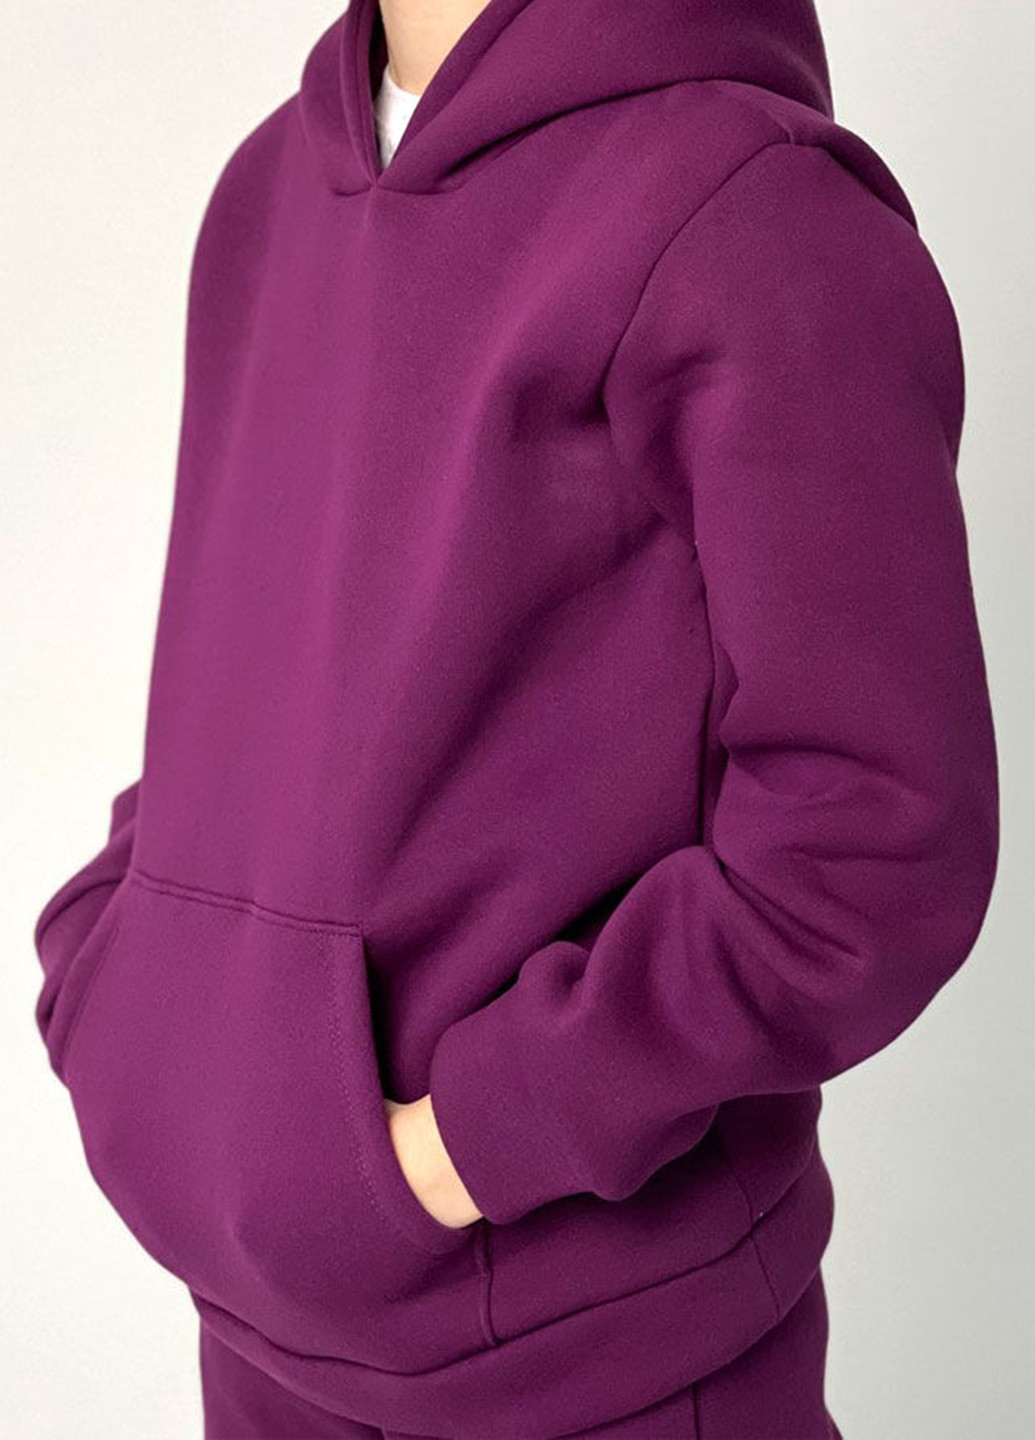 Спортивный костюм (худи, брюки) Blanka однотонный фиолетовый трикотаж, хлопок